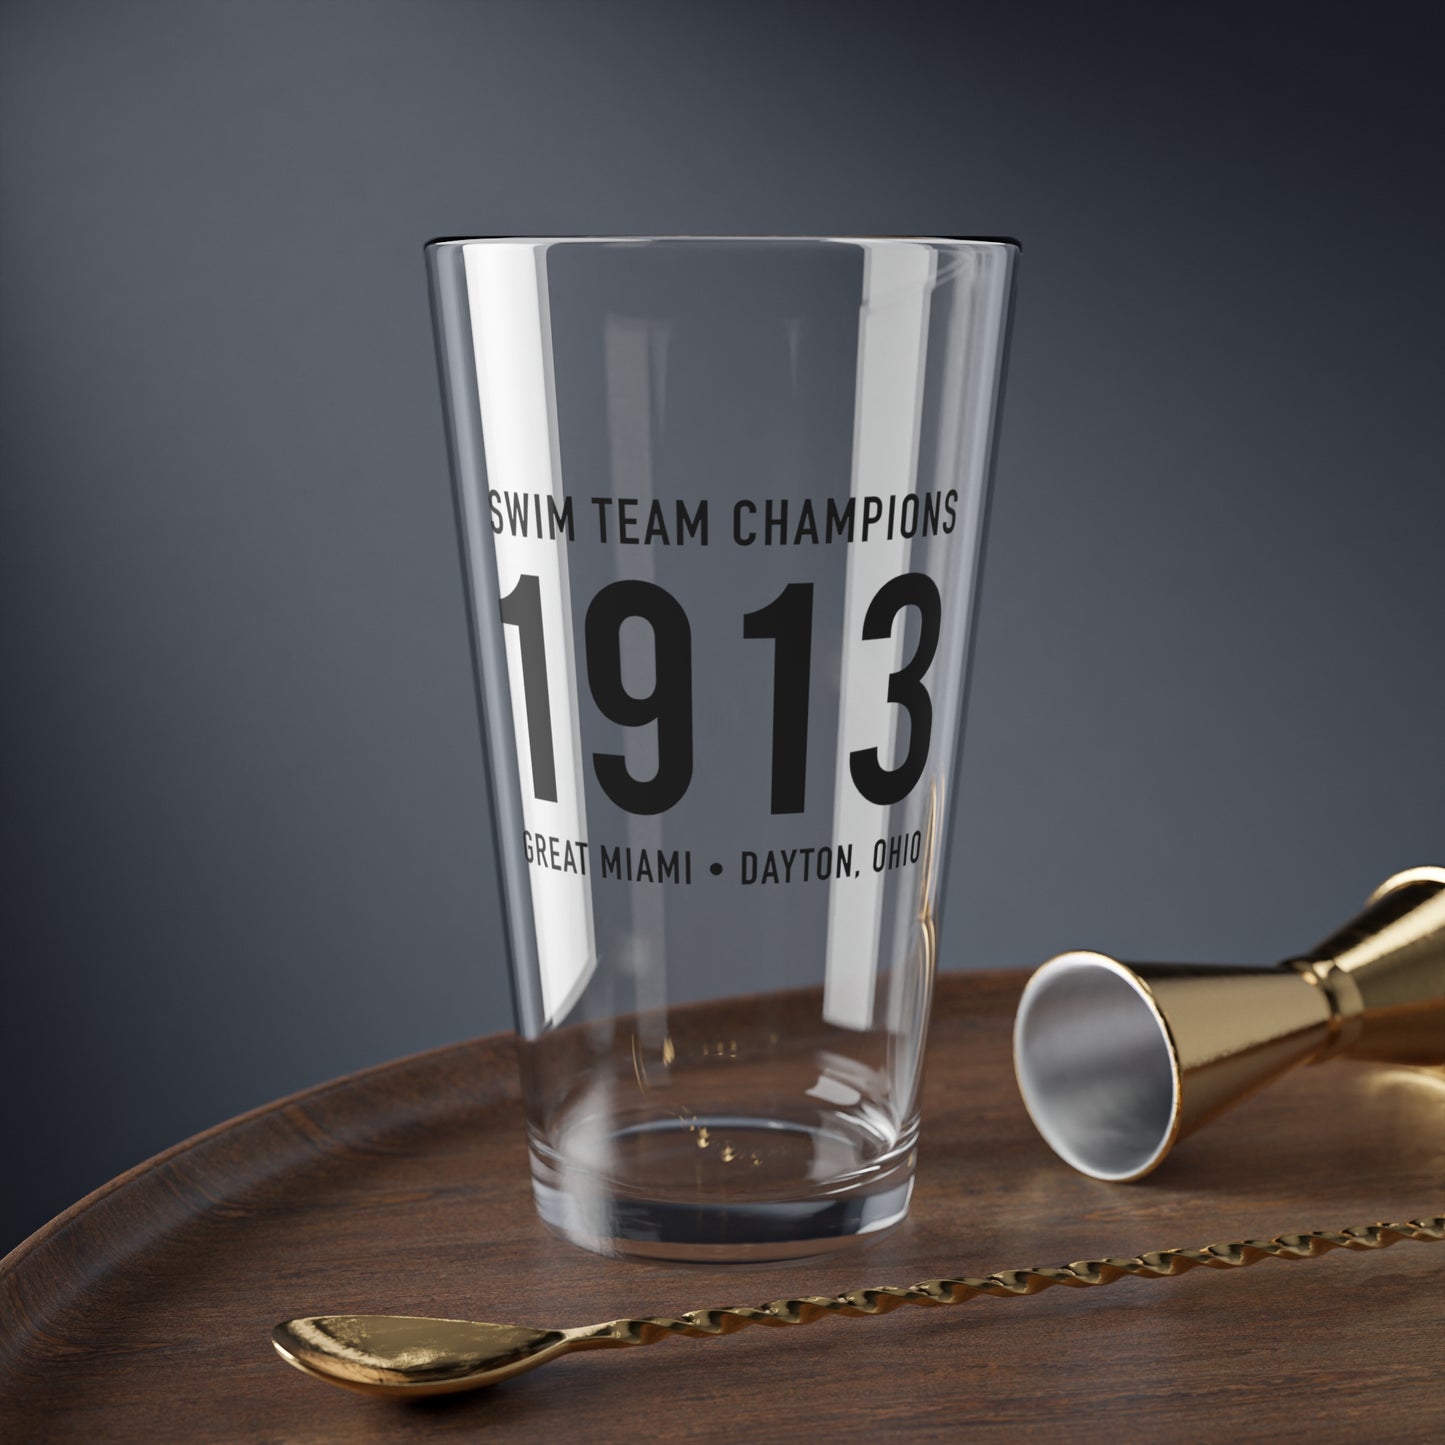 1913 Swim Team Champions Pint Glass